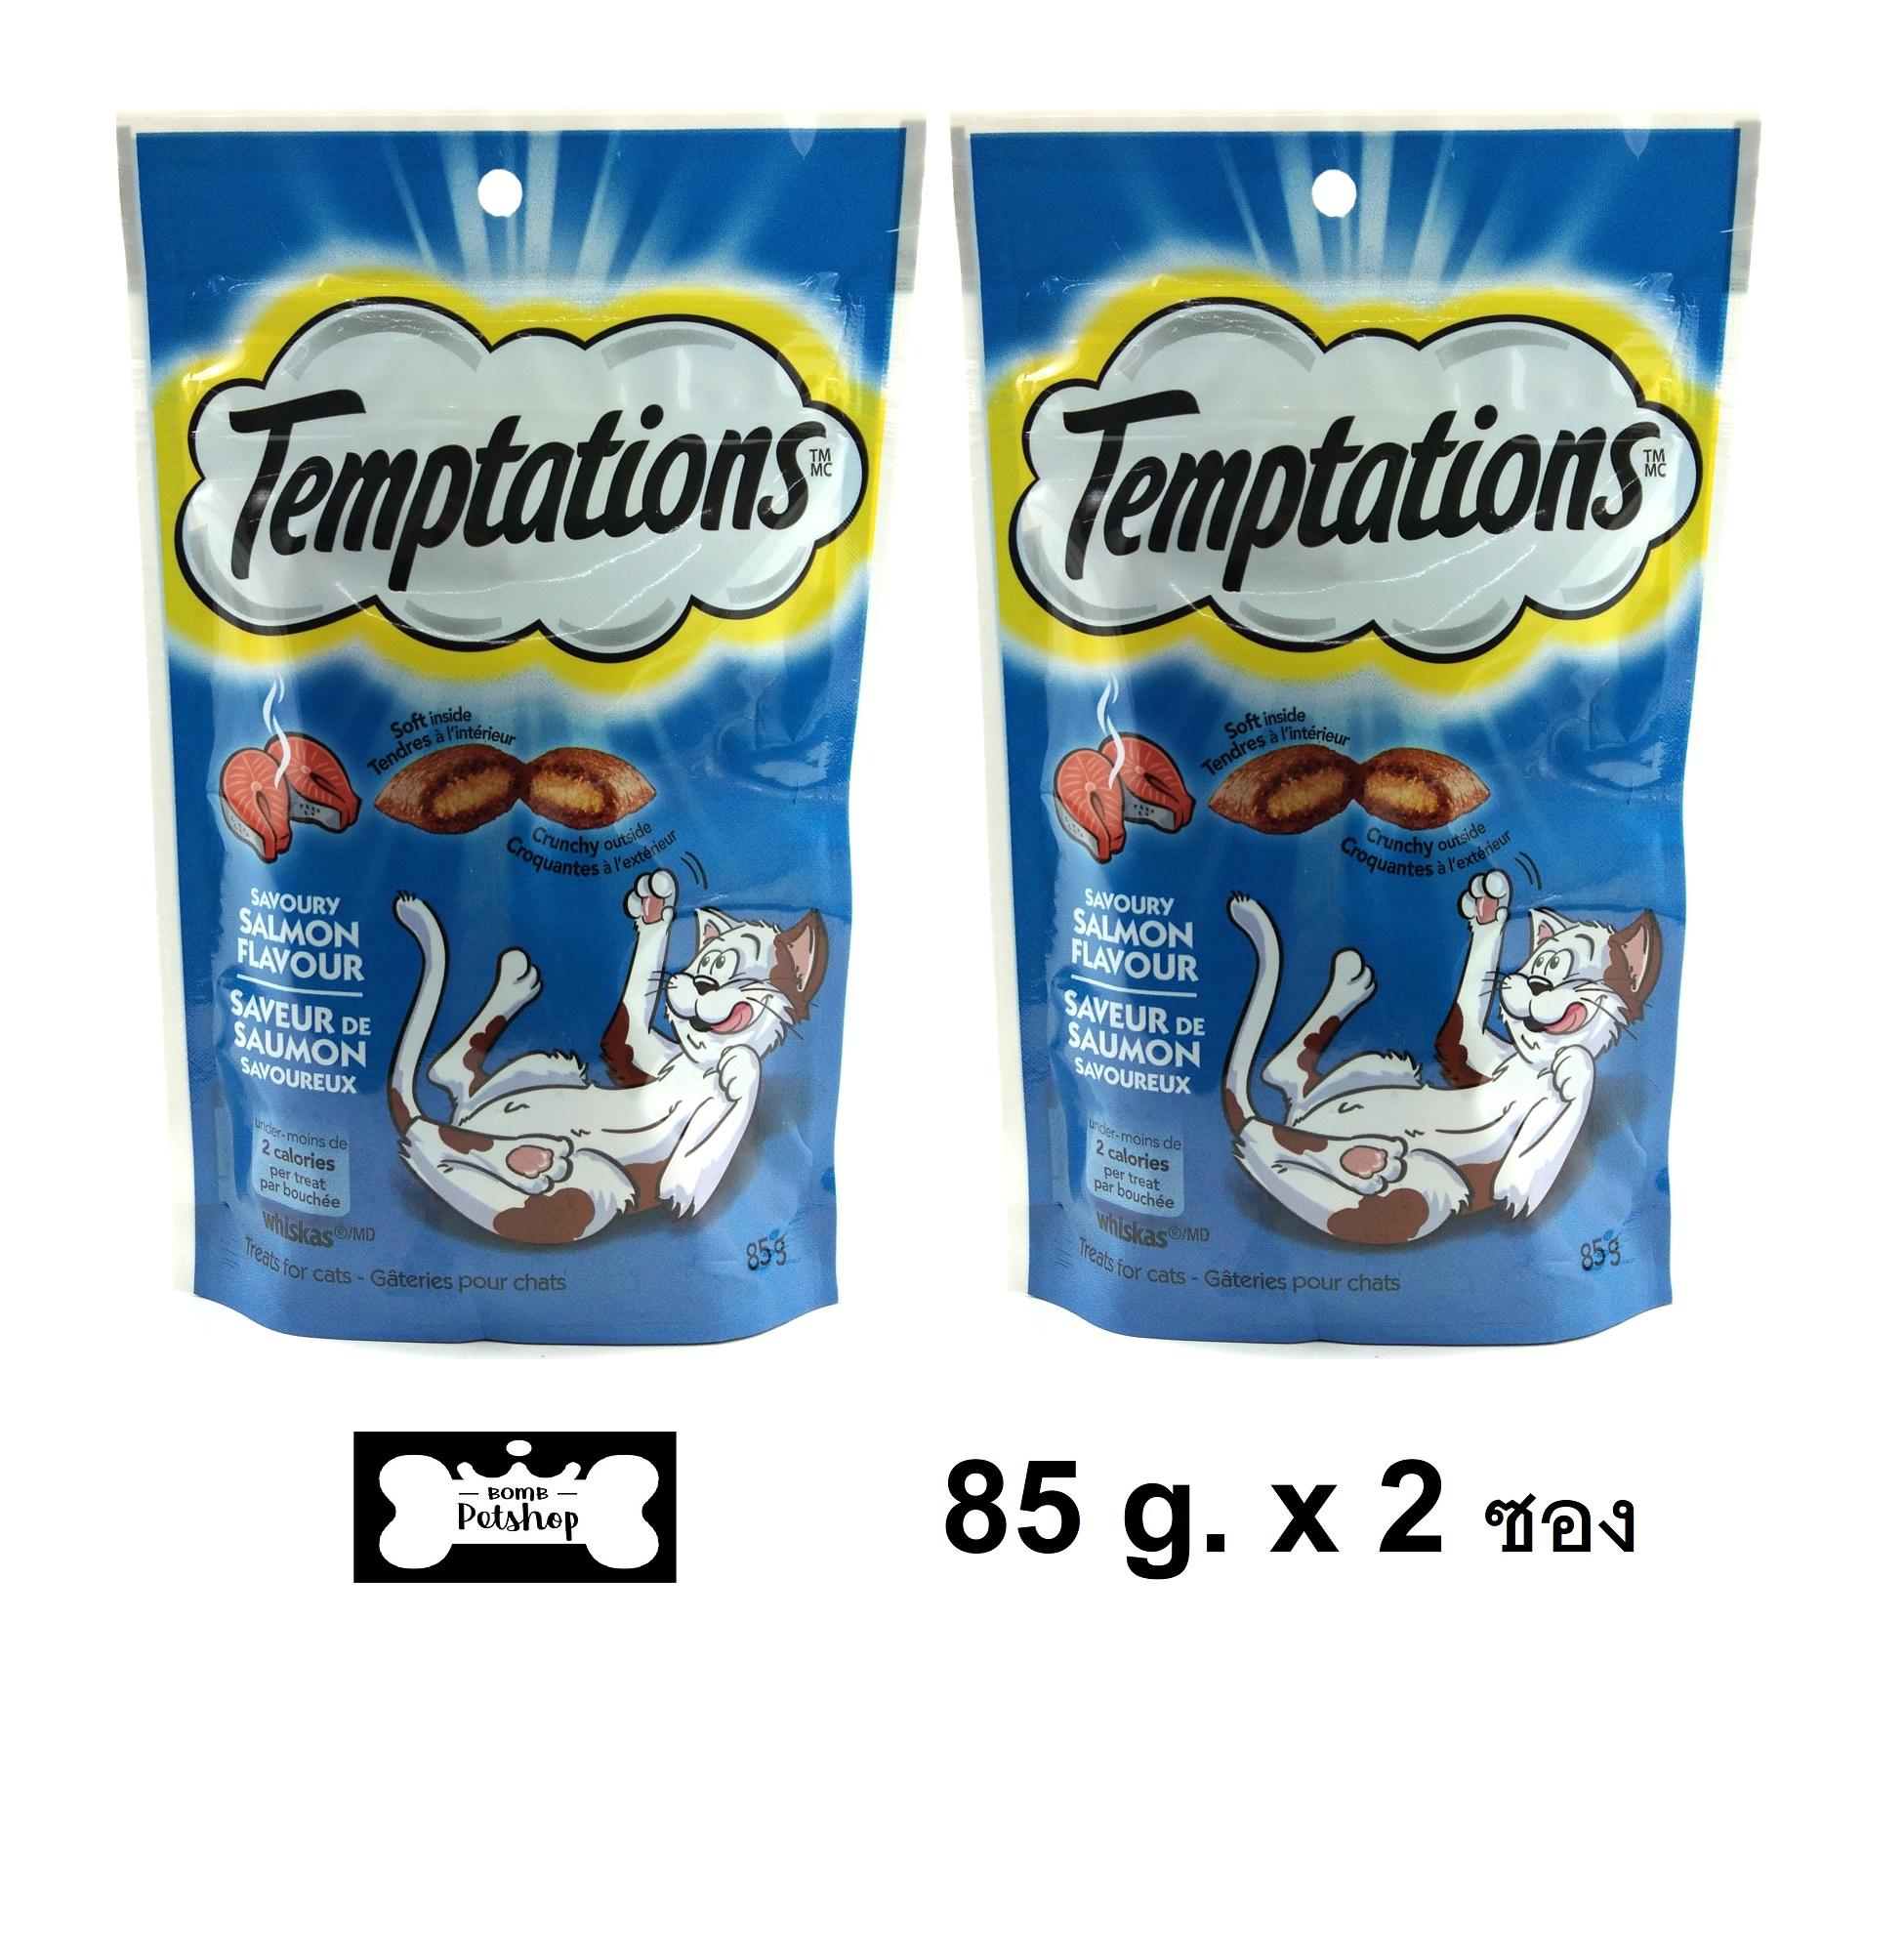 Whiskas Temptations Tempting salmon flavour ขนมแมว เทมเทชันส์ รสแซลมอน 85g ( 2 units )